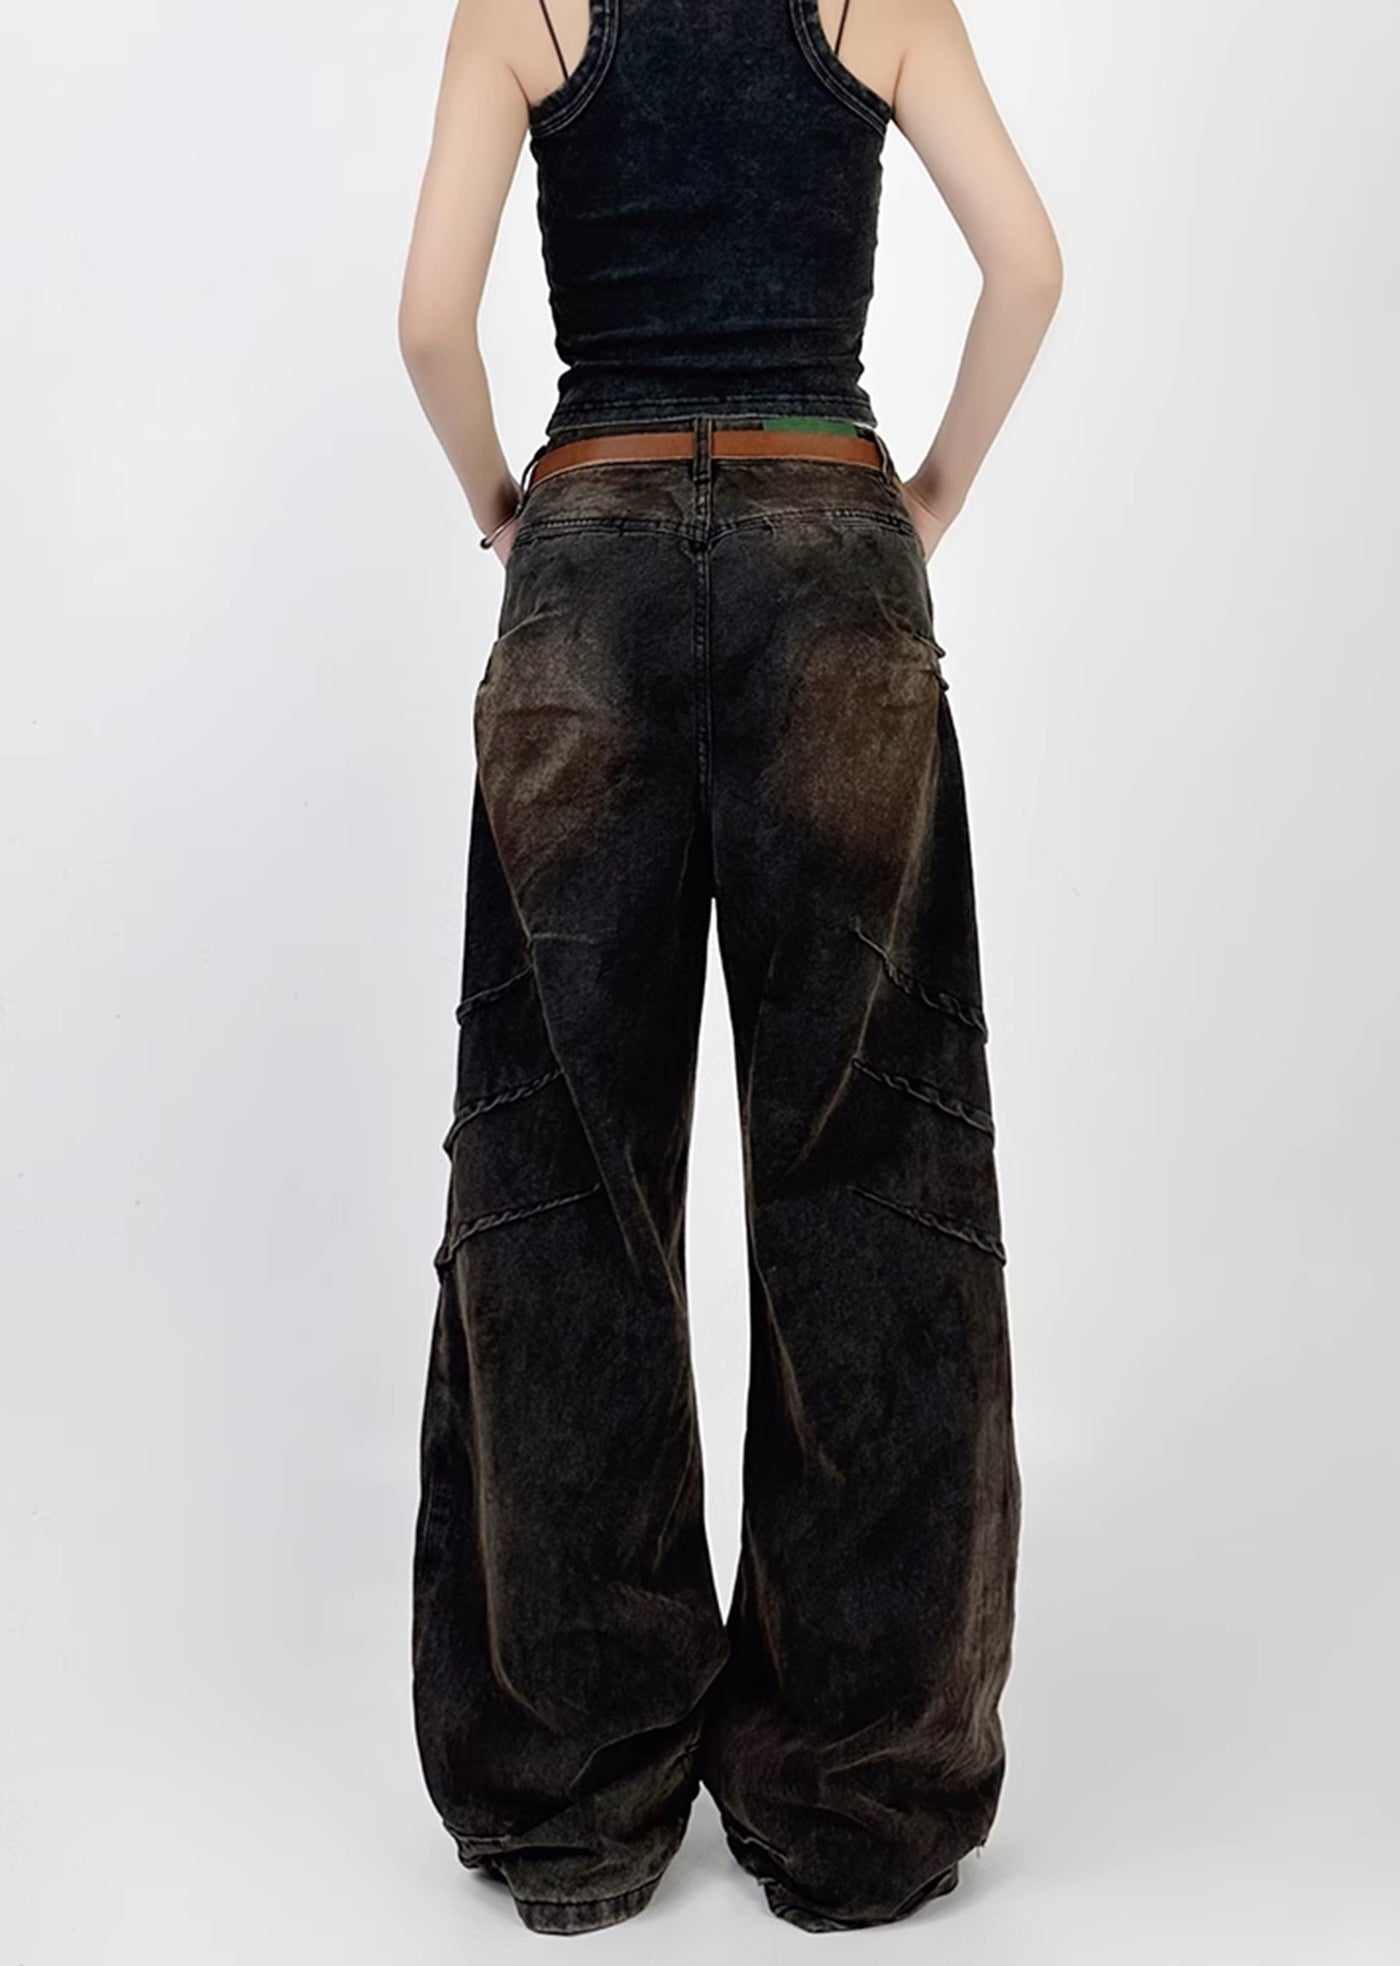 Double claw mark design grunge rust color wide denim pants  HL3039